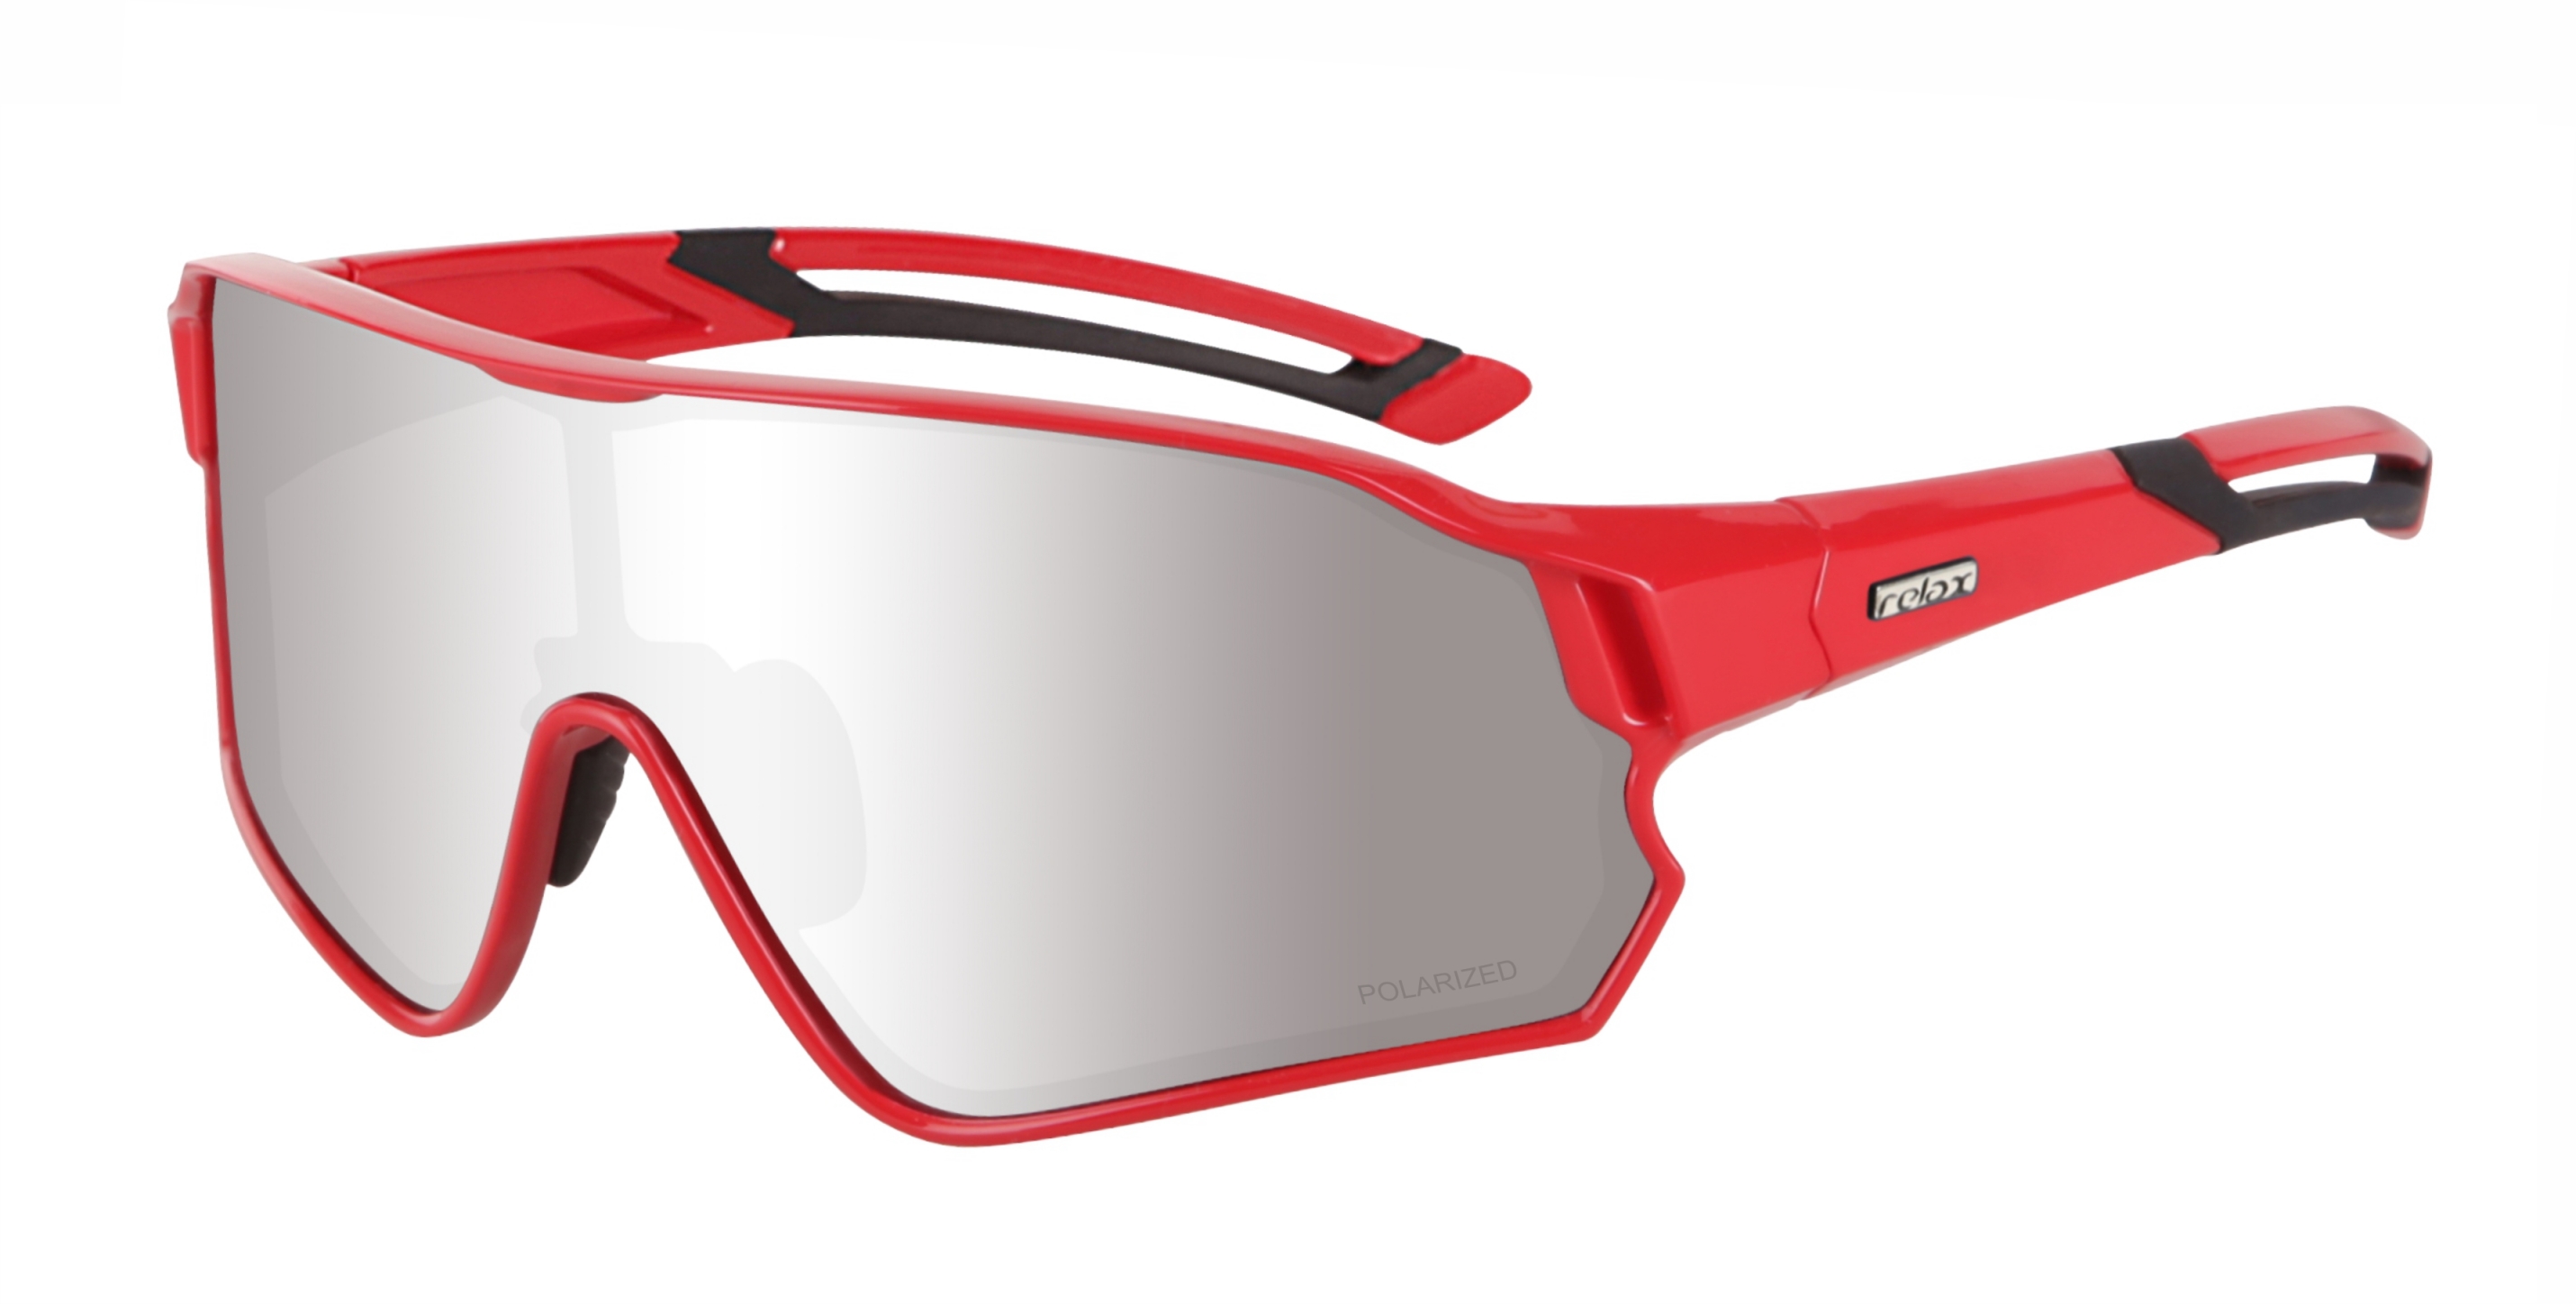 Polarized sport sunglasses Relax Artan R5416I